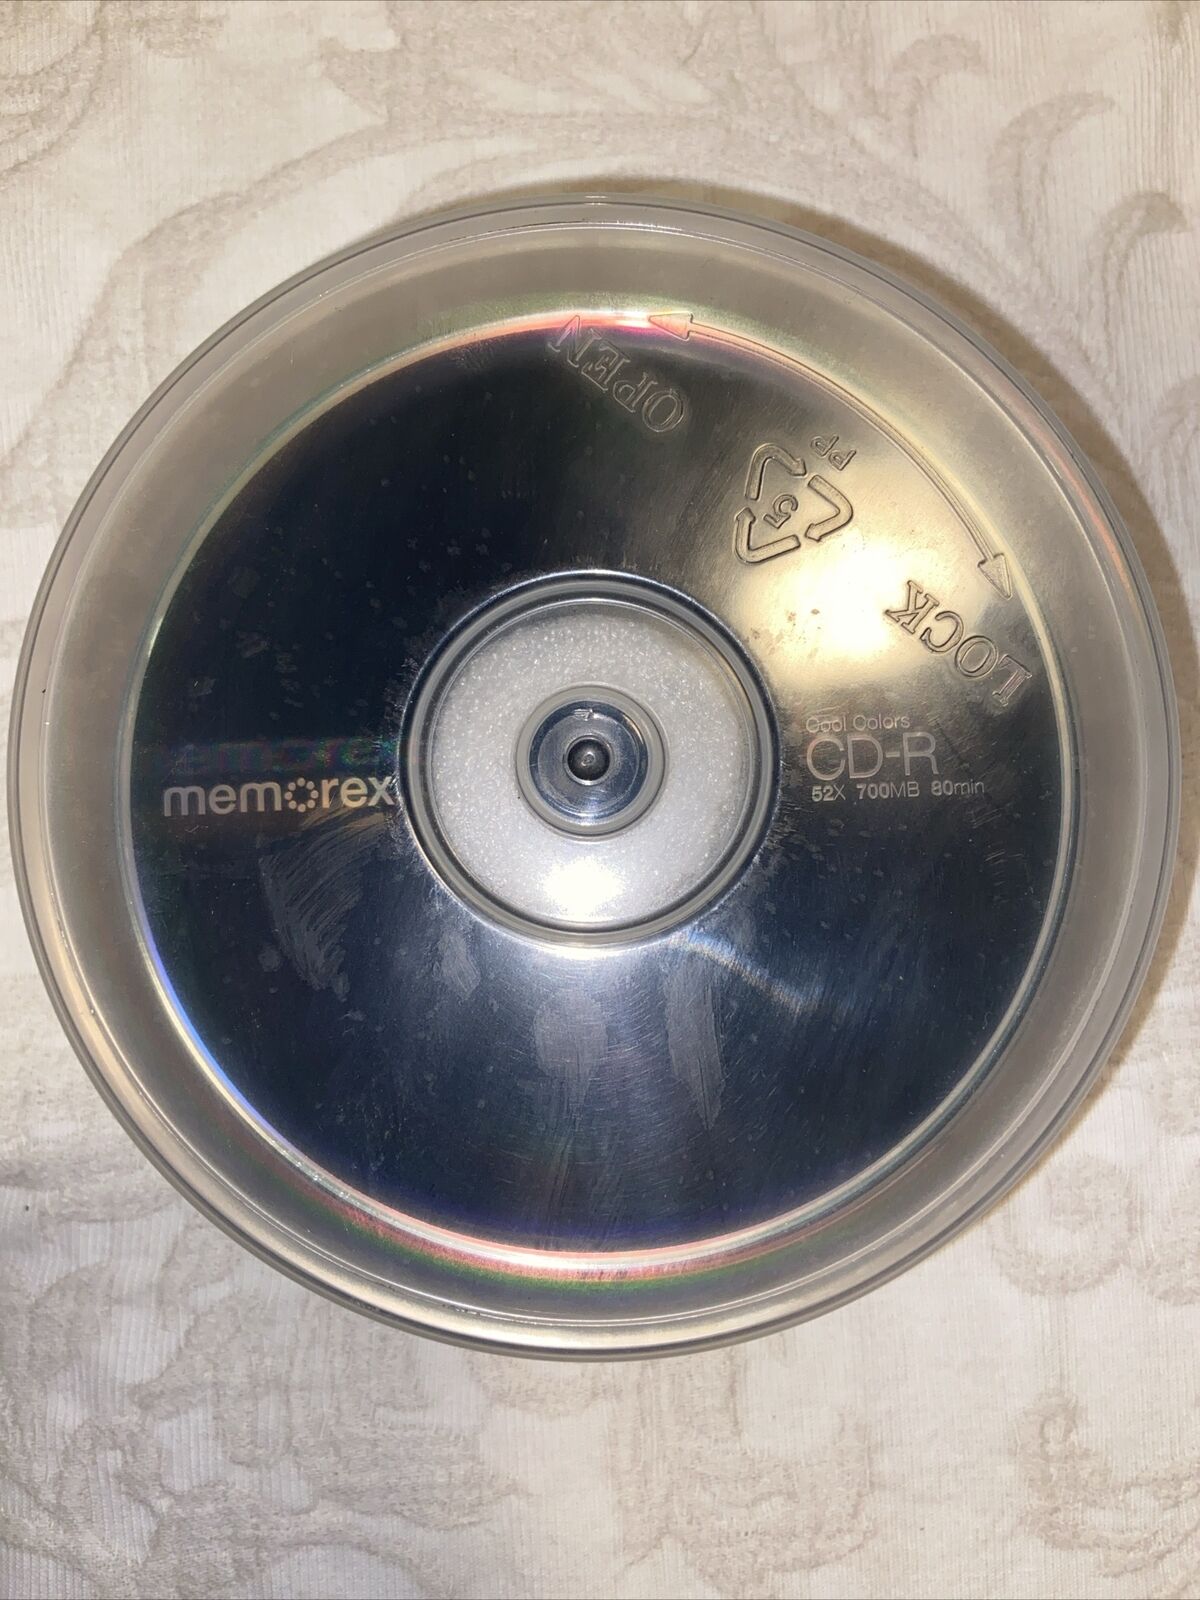 Lot Of 15 Memorex Black Cool Colors Recordable CD-R 700MB 52X 80 Min